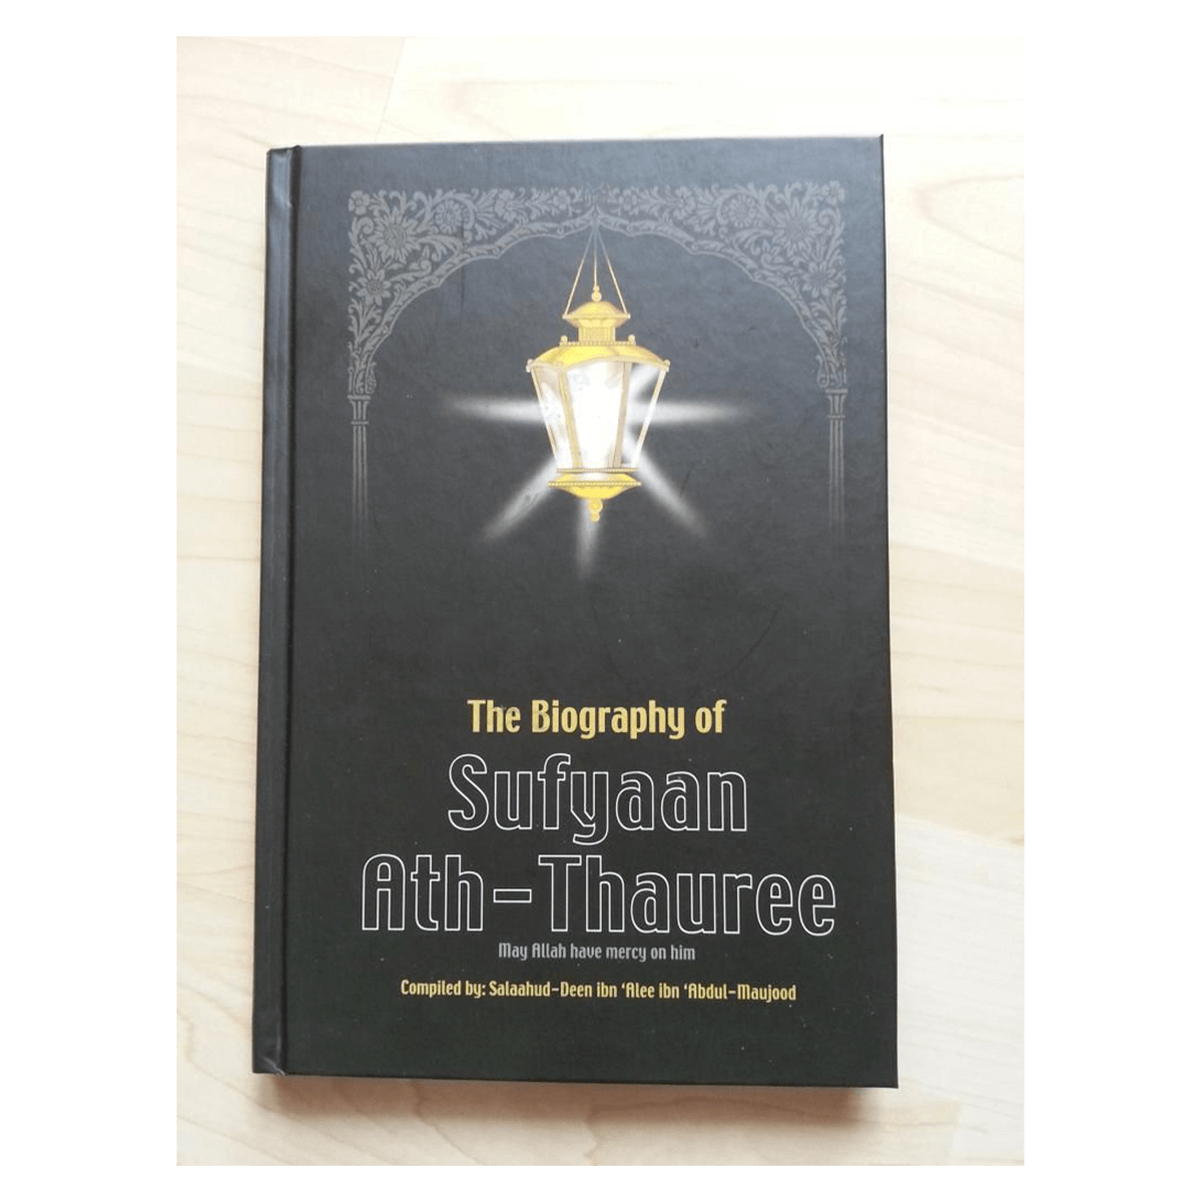 The Biography of Sufyan ath Thauree